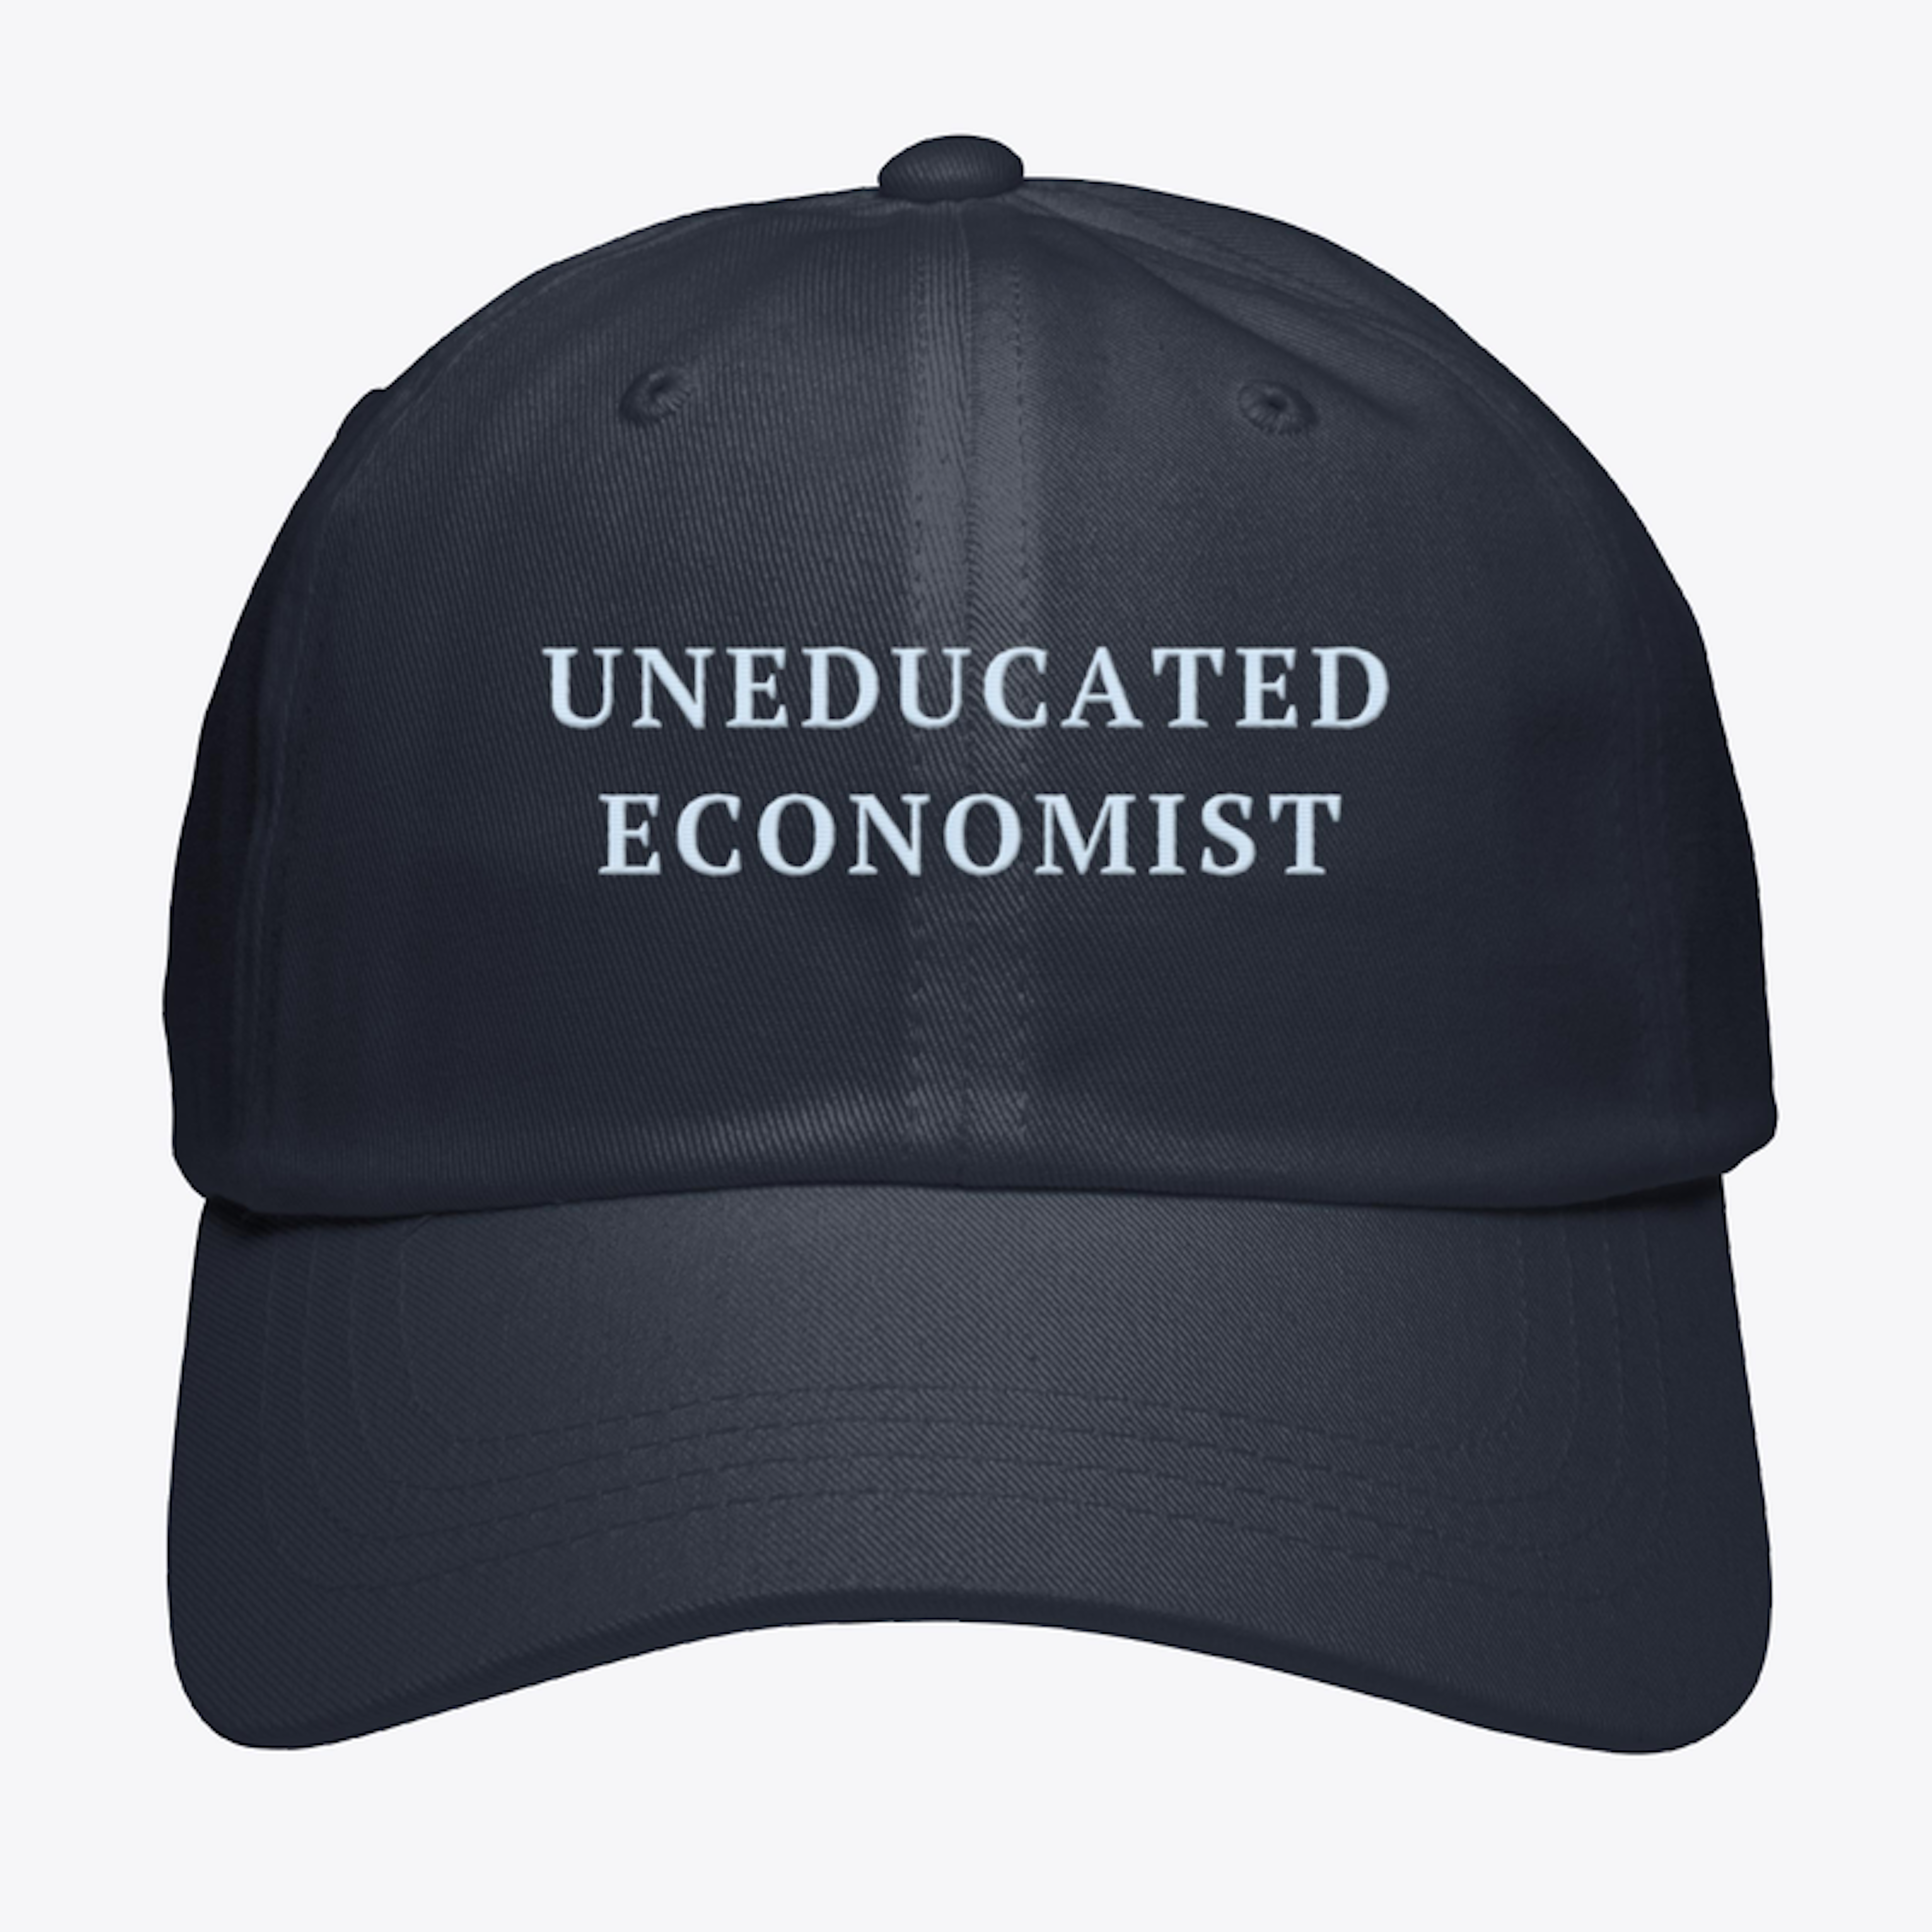 Uneducated Economist